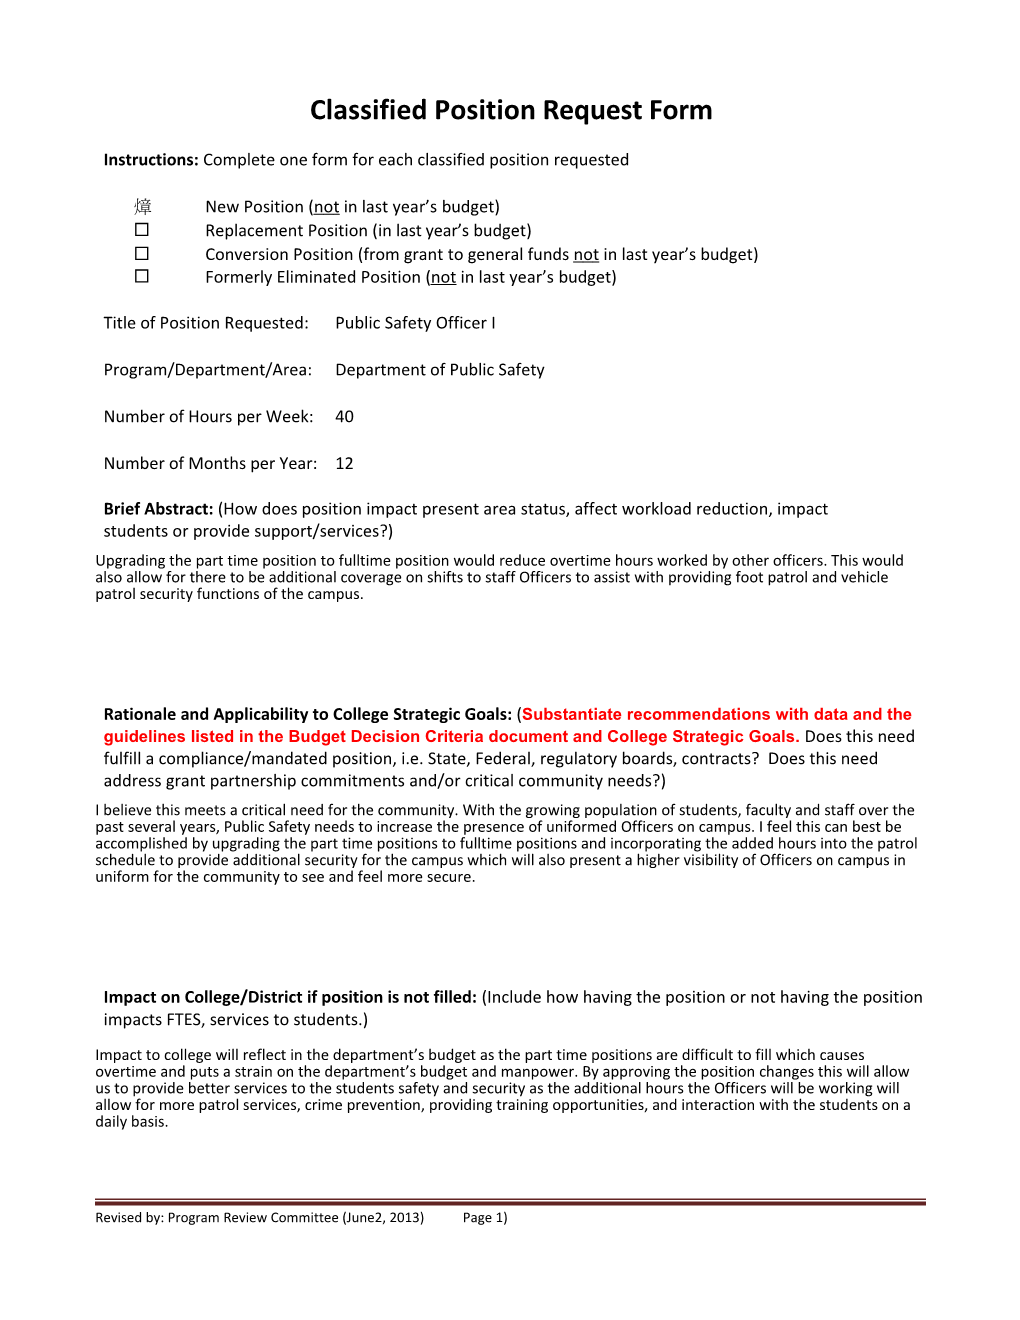 Classifiedpositionrequest Form